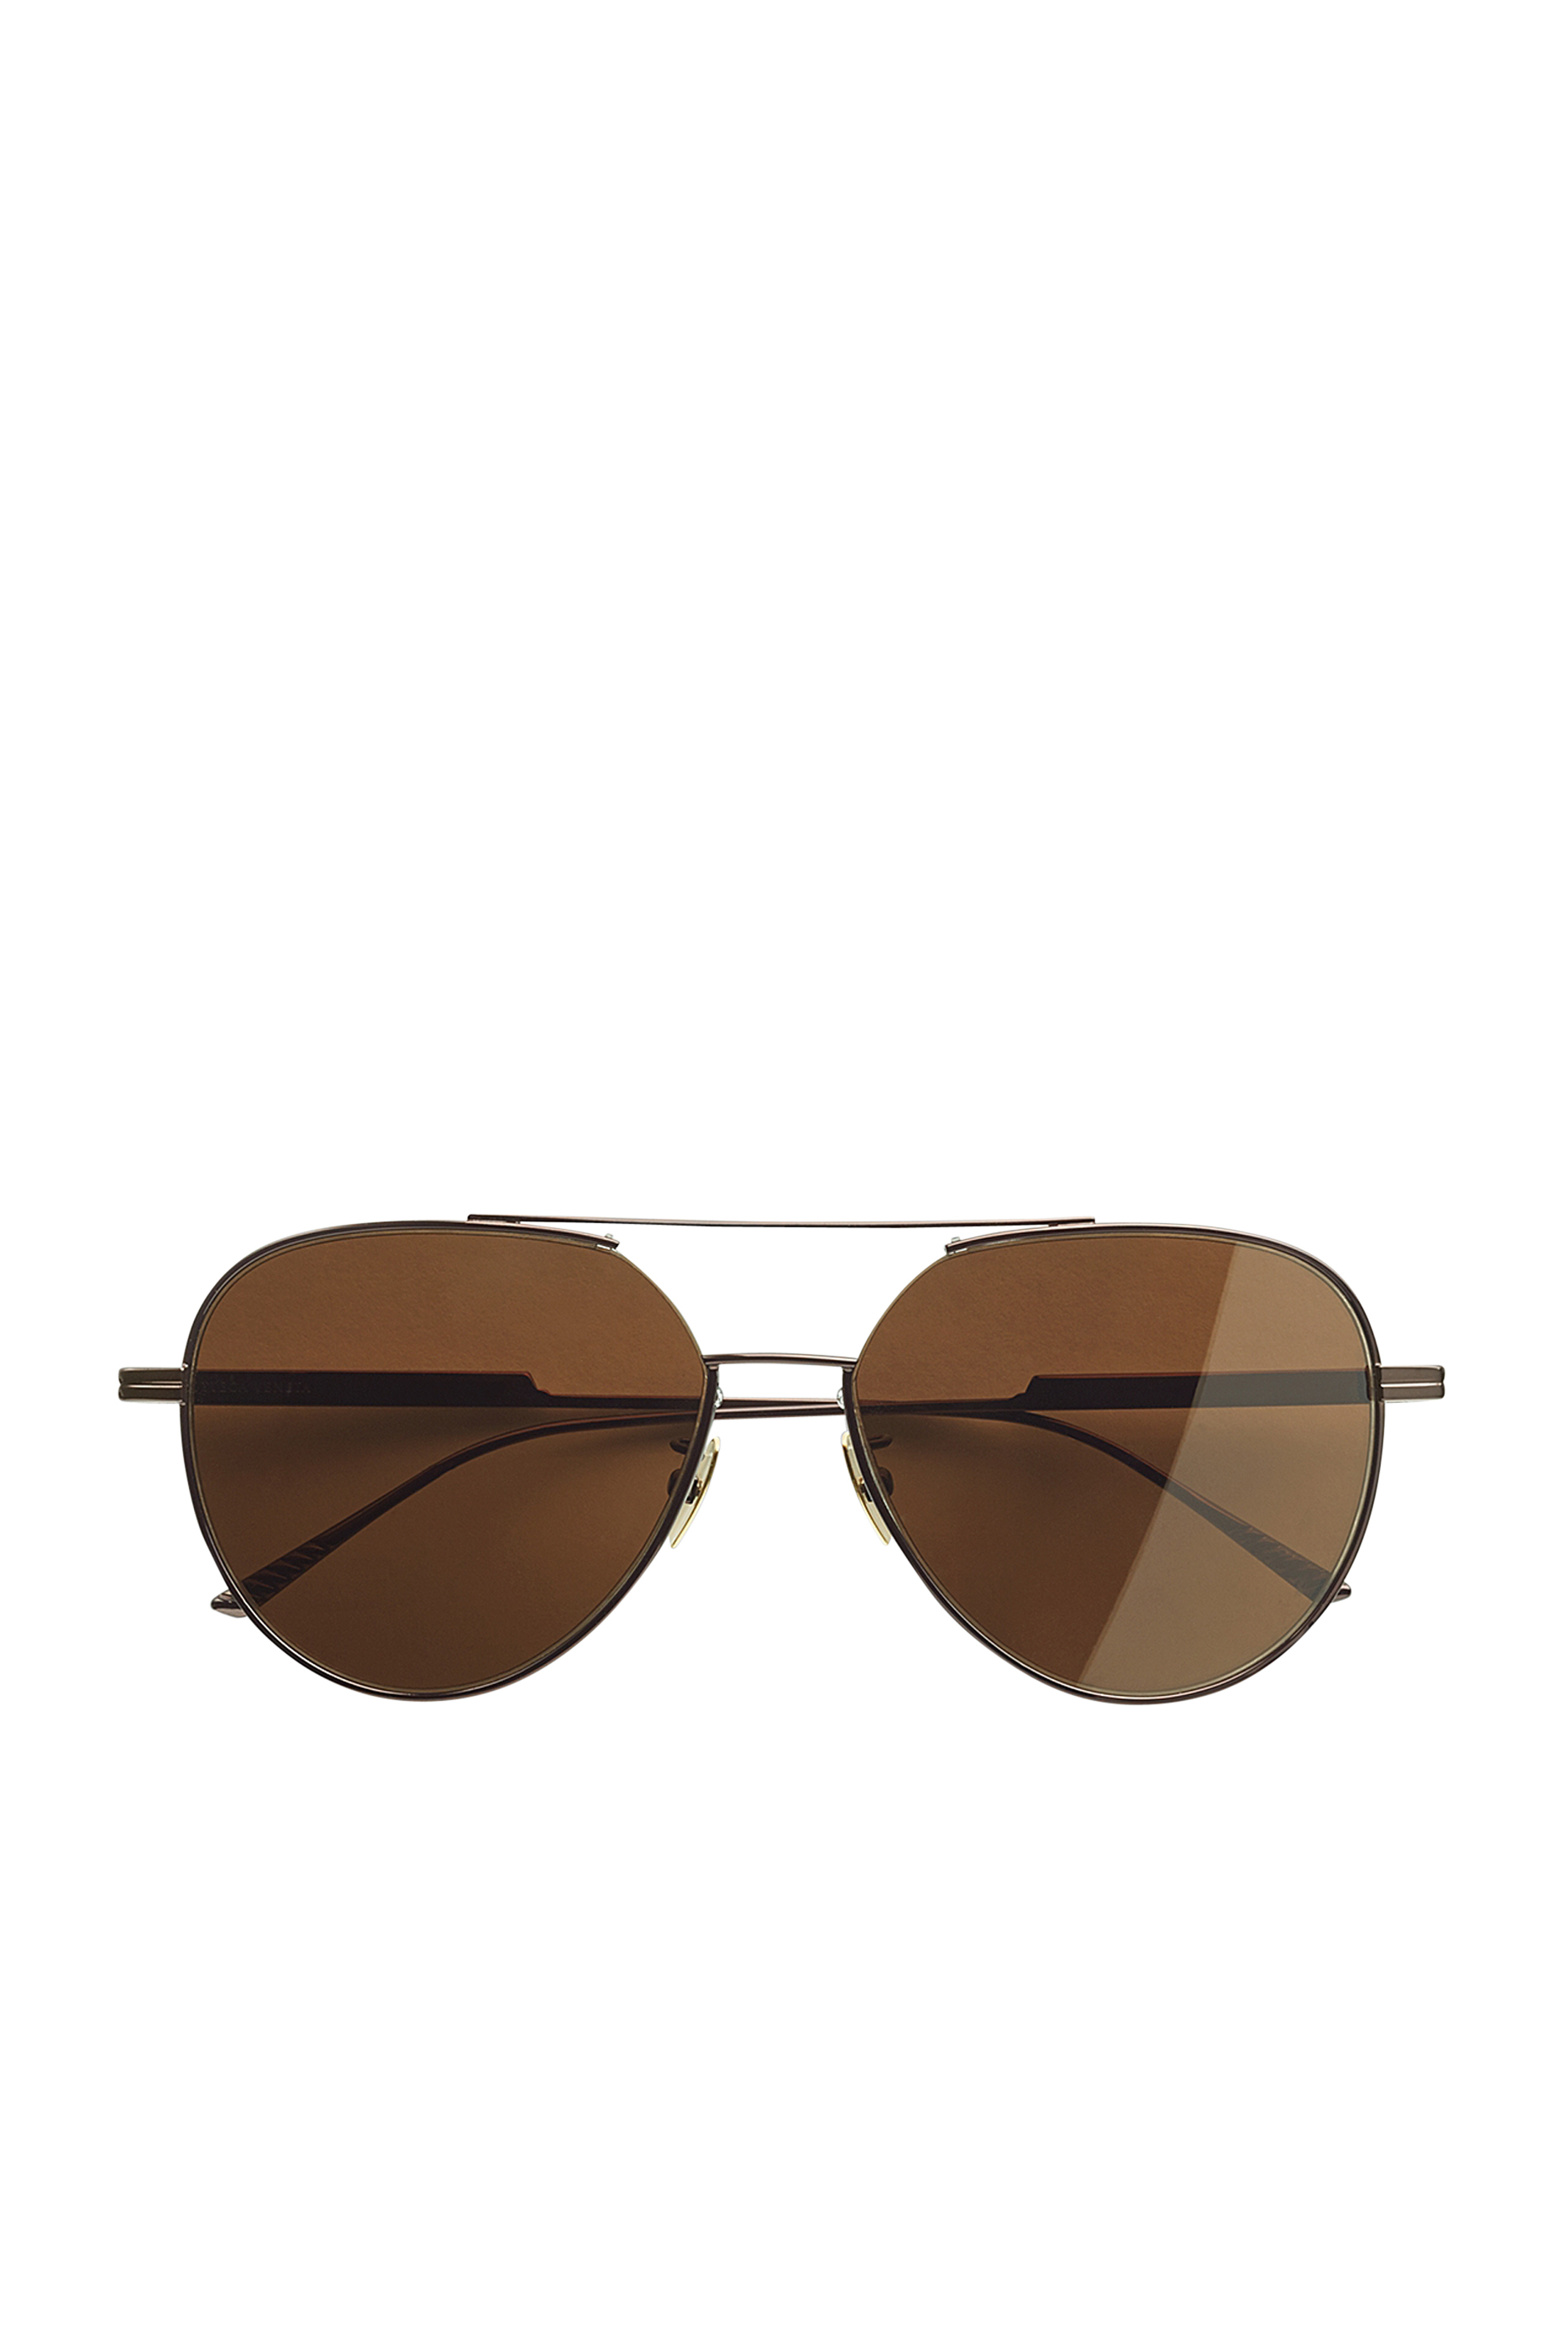 Buy Bottega Veneta Aviator Sunglasses for Unisex | Bloomingdale's UAE